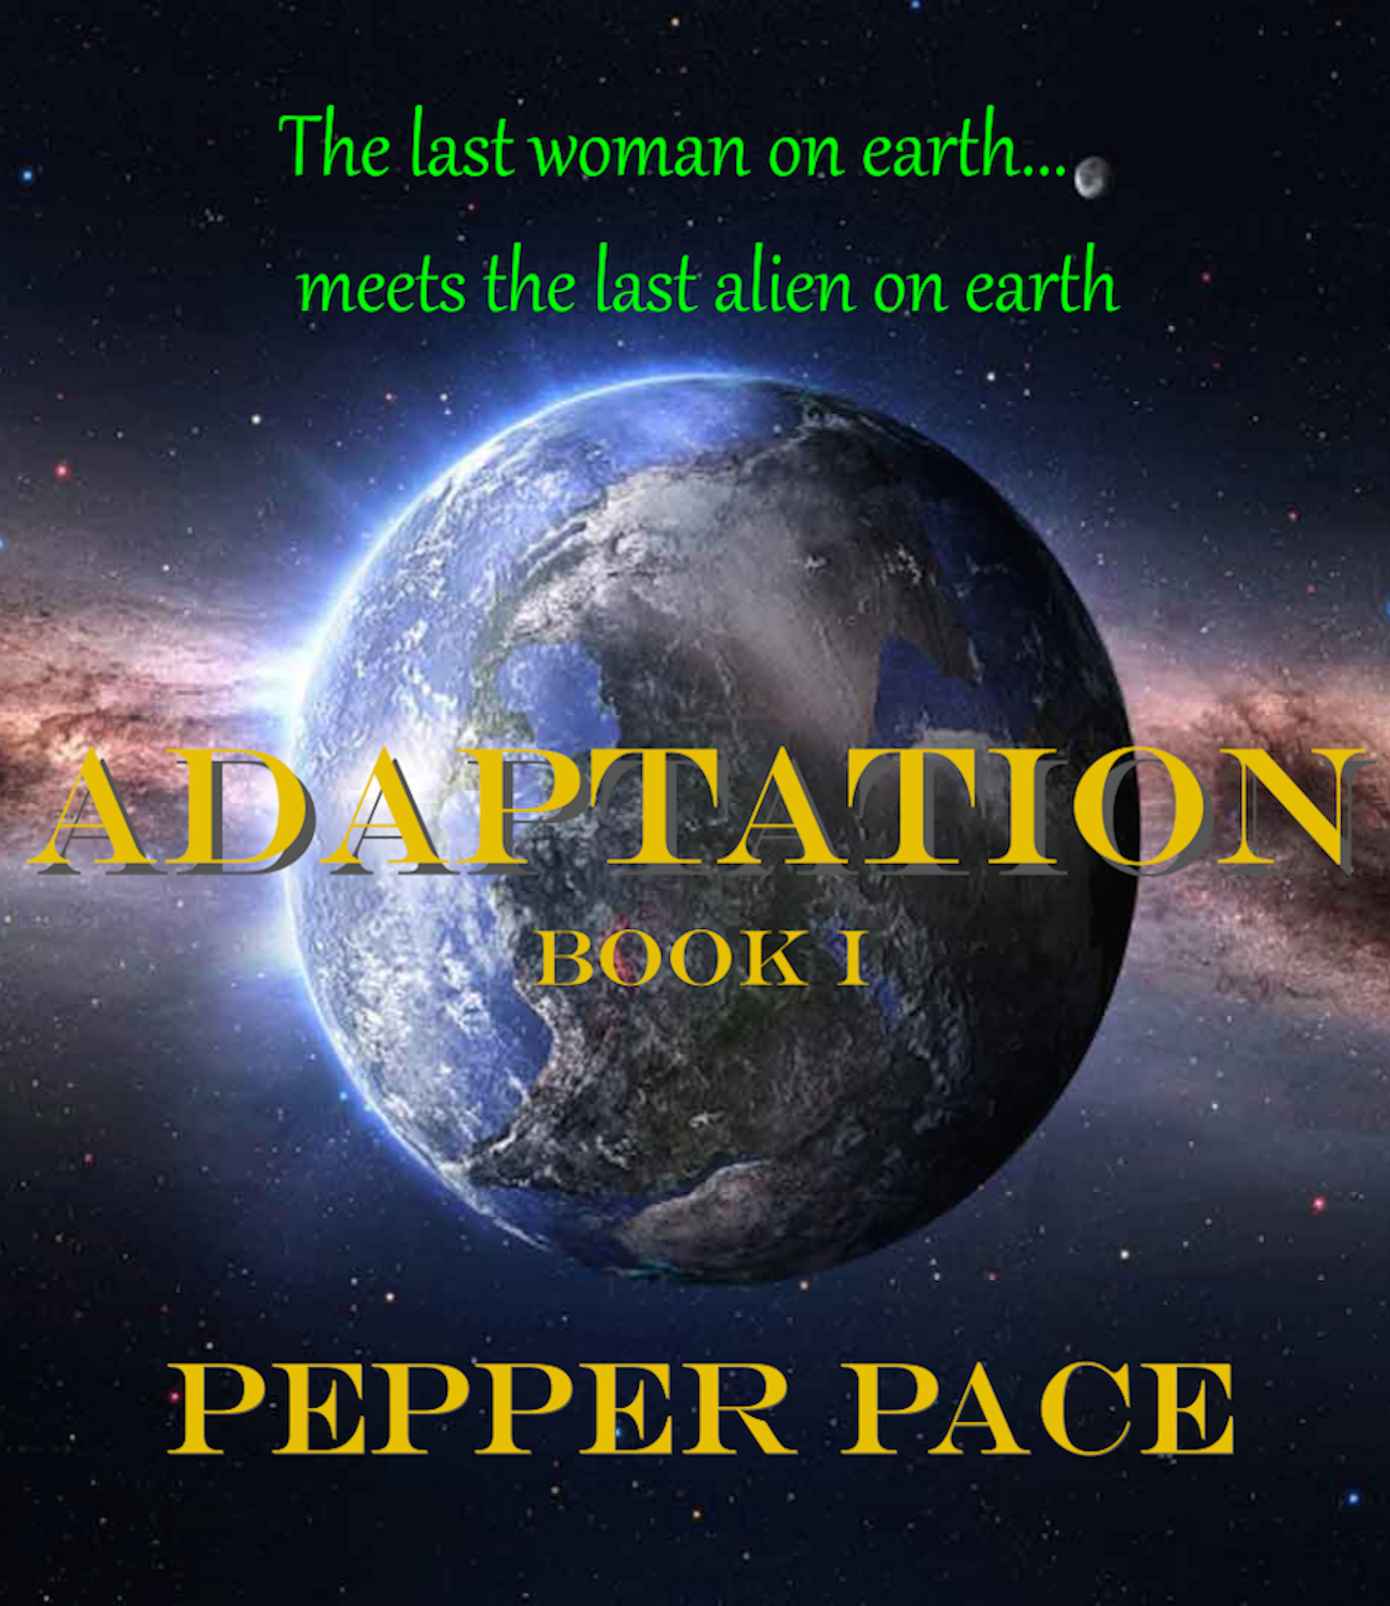 Adaptation: book I